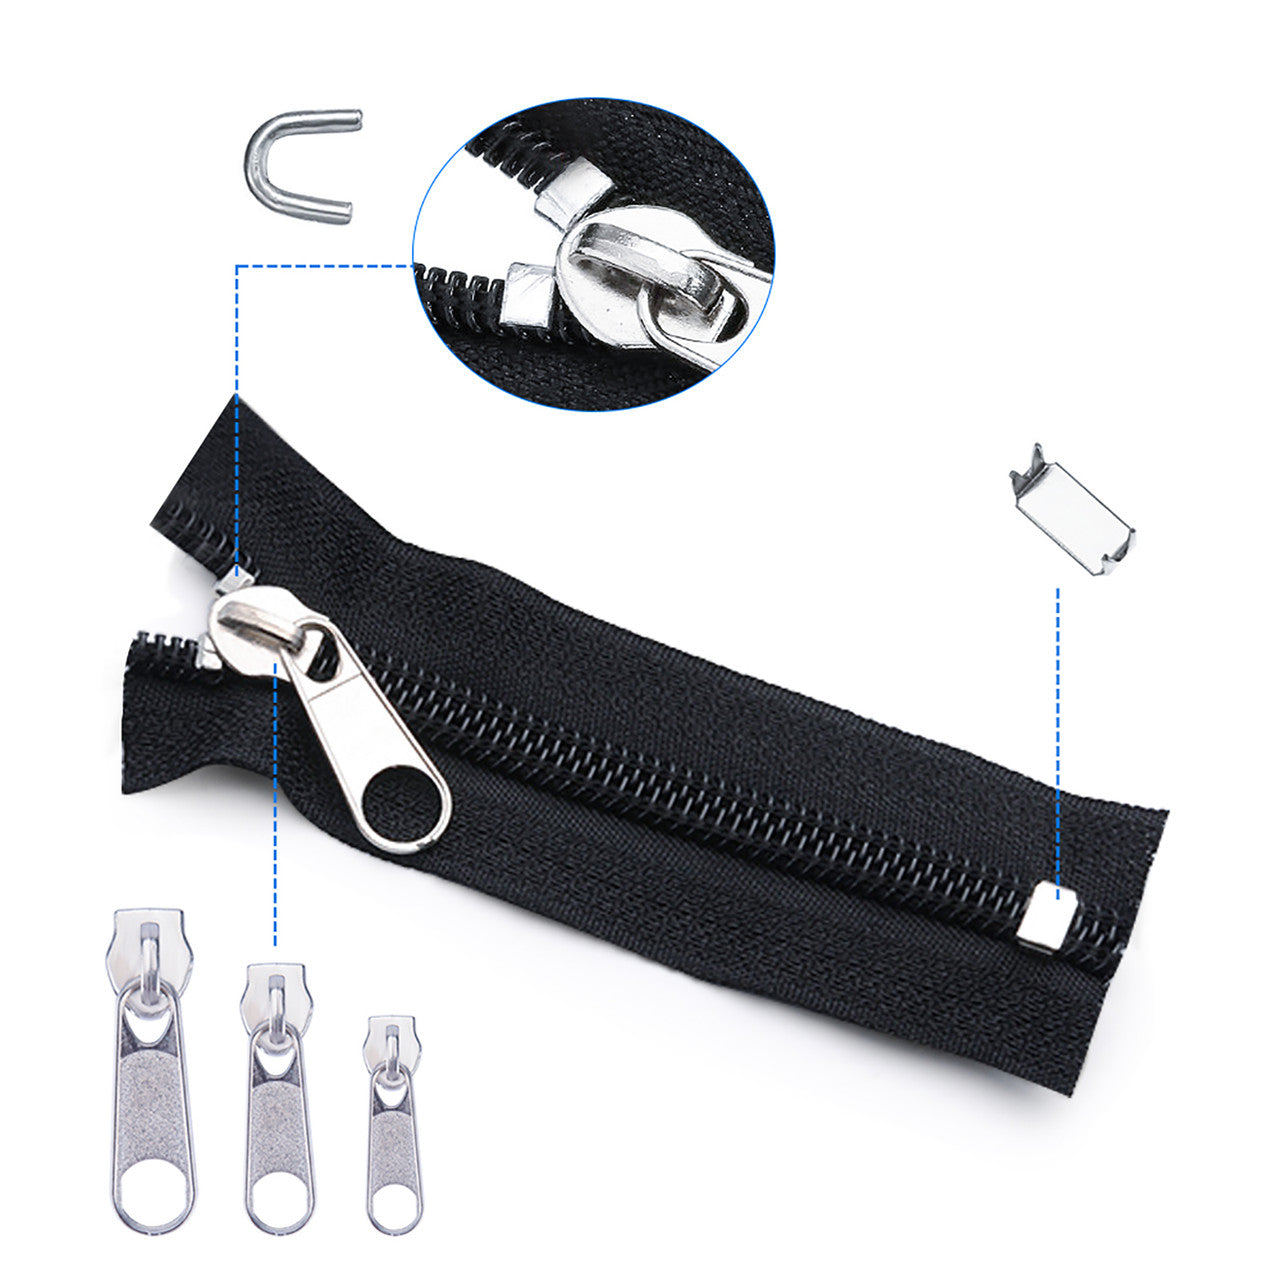 Zipper Repair Kit, Zipper Rescue Zipper Pull Replacement Accessories, Zipper Slider, Zipper Stopper & Zipper Install Plier for DIY Craft Jacket Backpack Suitcase Tents Luggage Zip Repair, 85Pcs